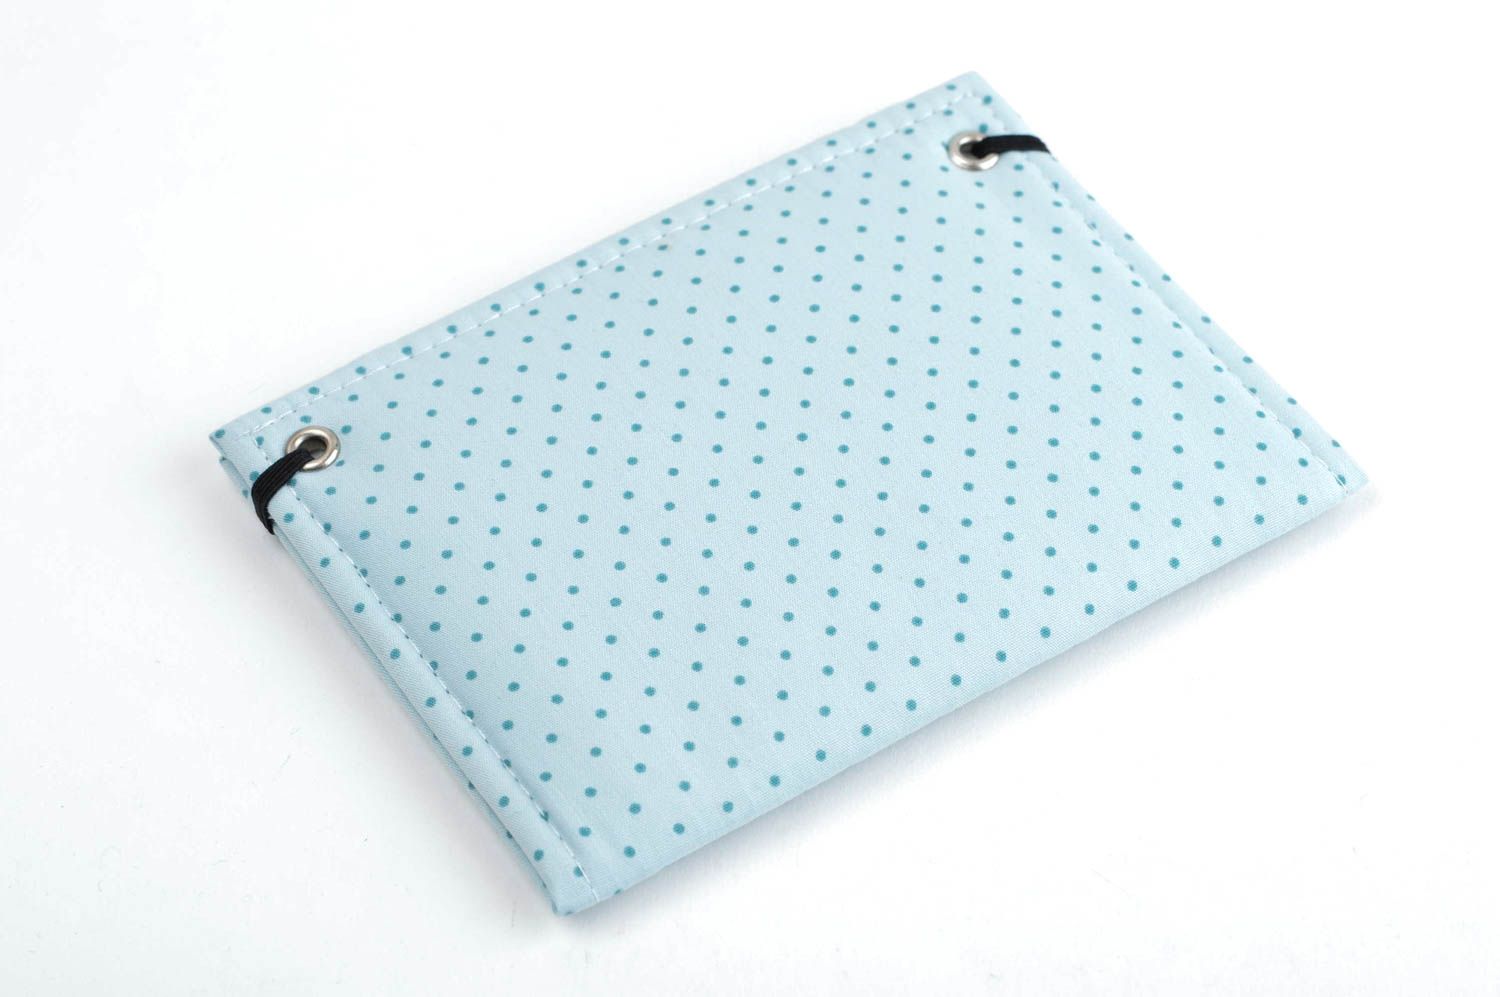 Unusual handmade fabric passport cover handmade accessories for girls gift ideas photo 3